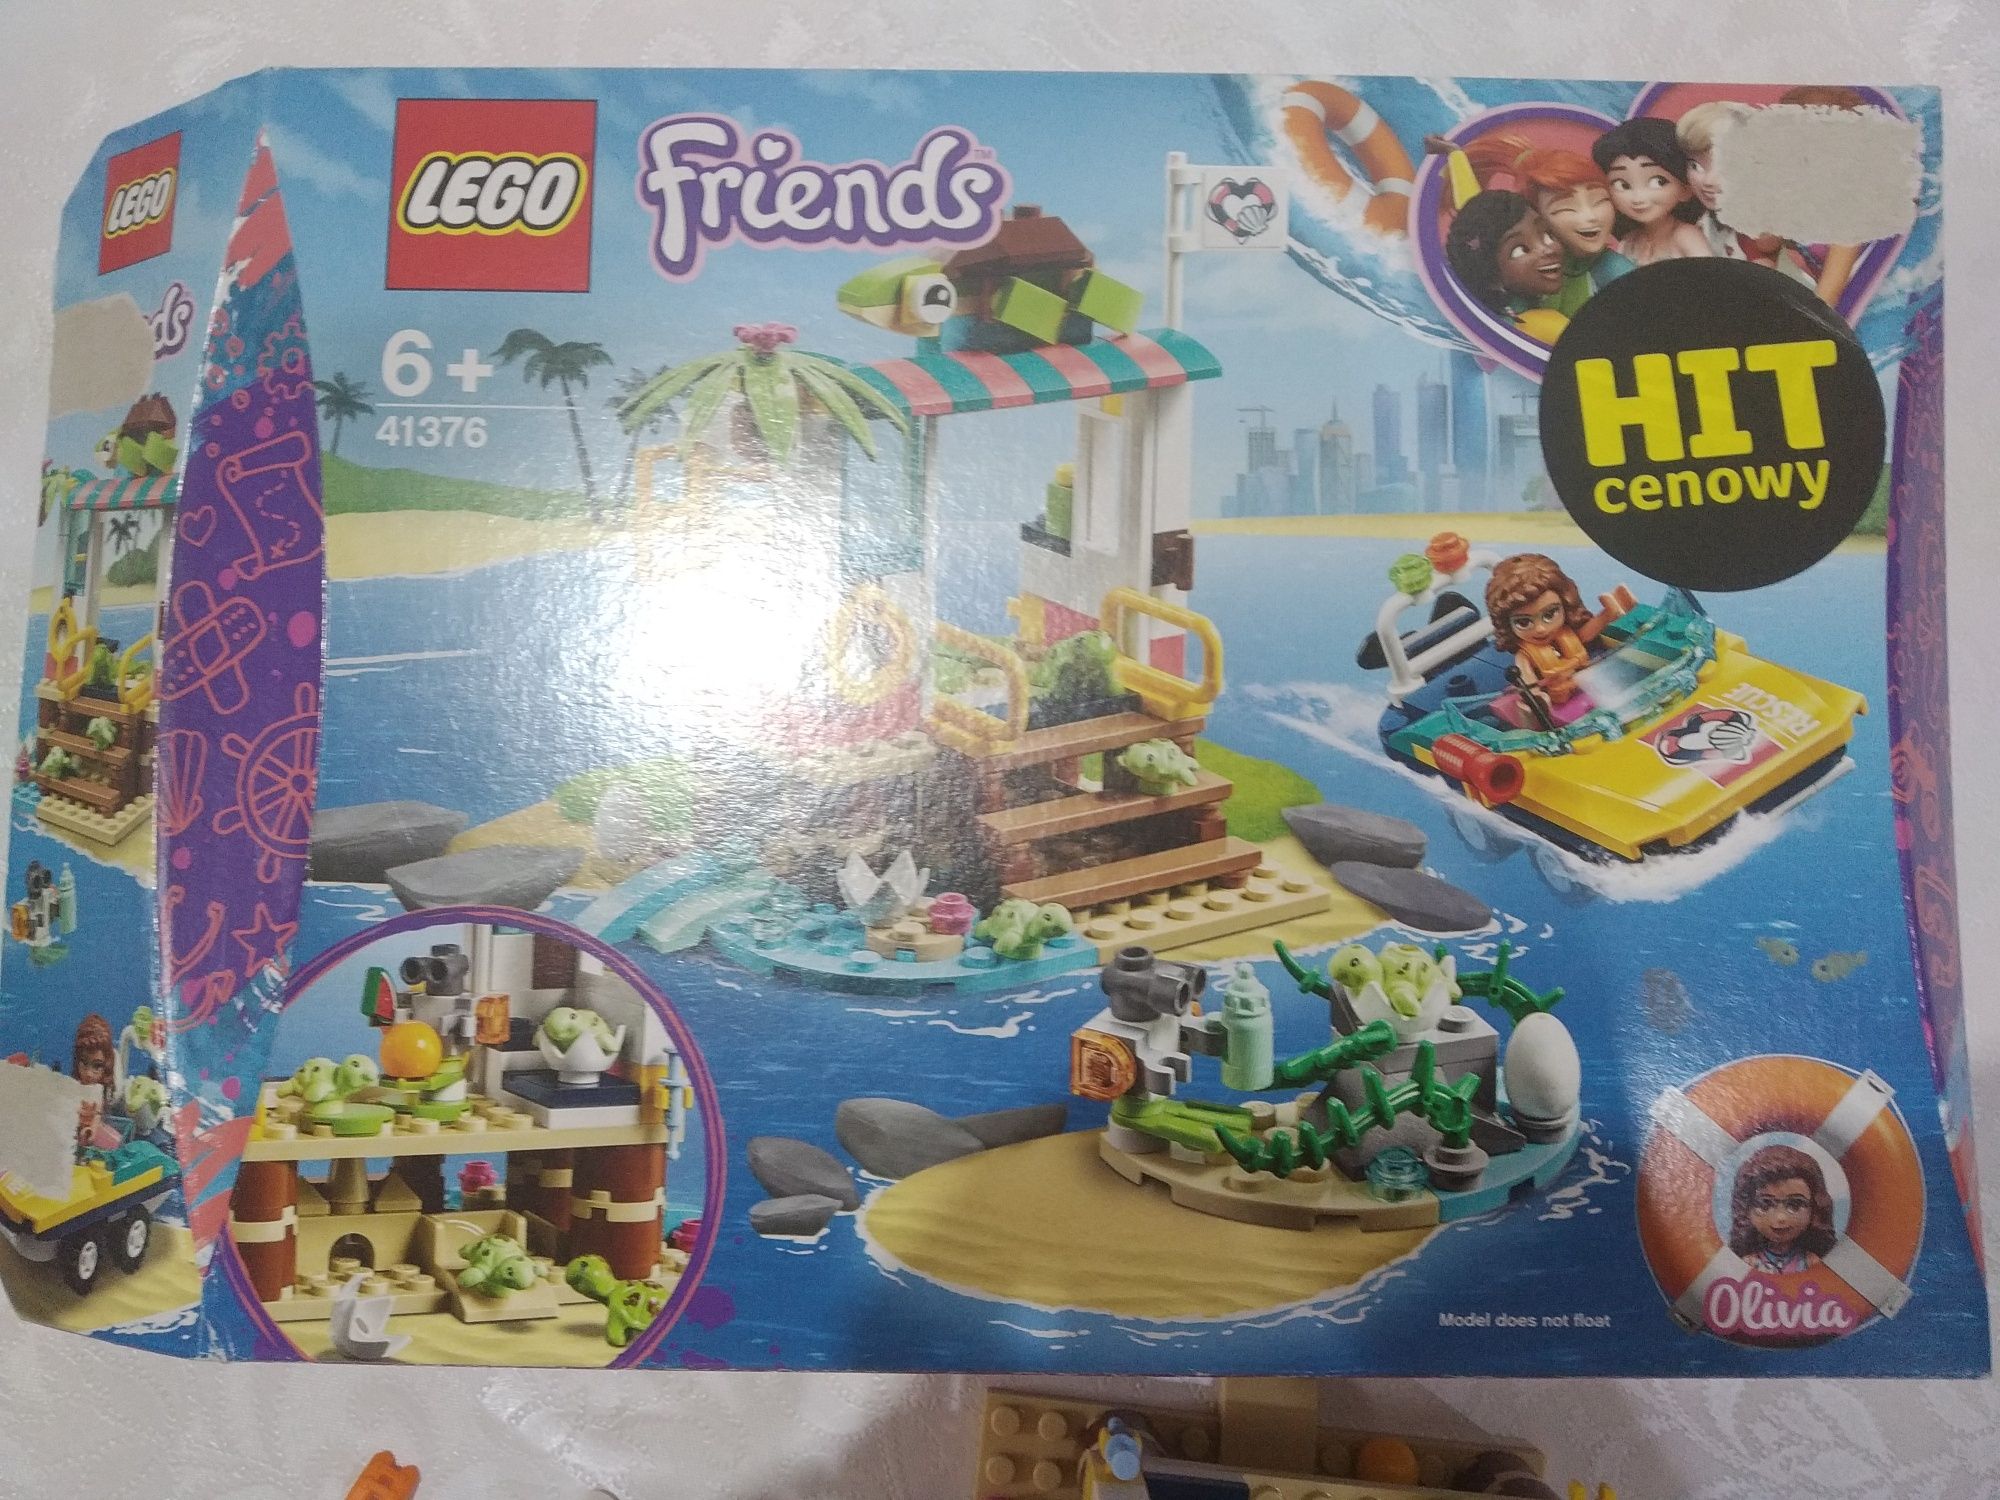 LEGO friends 41376